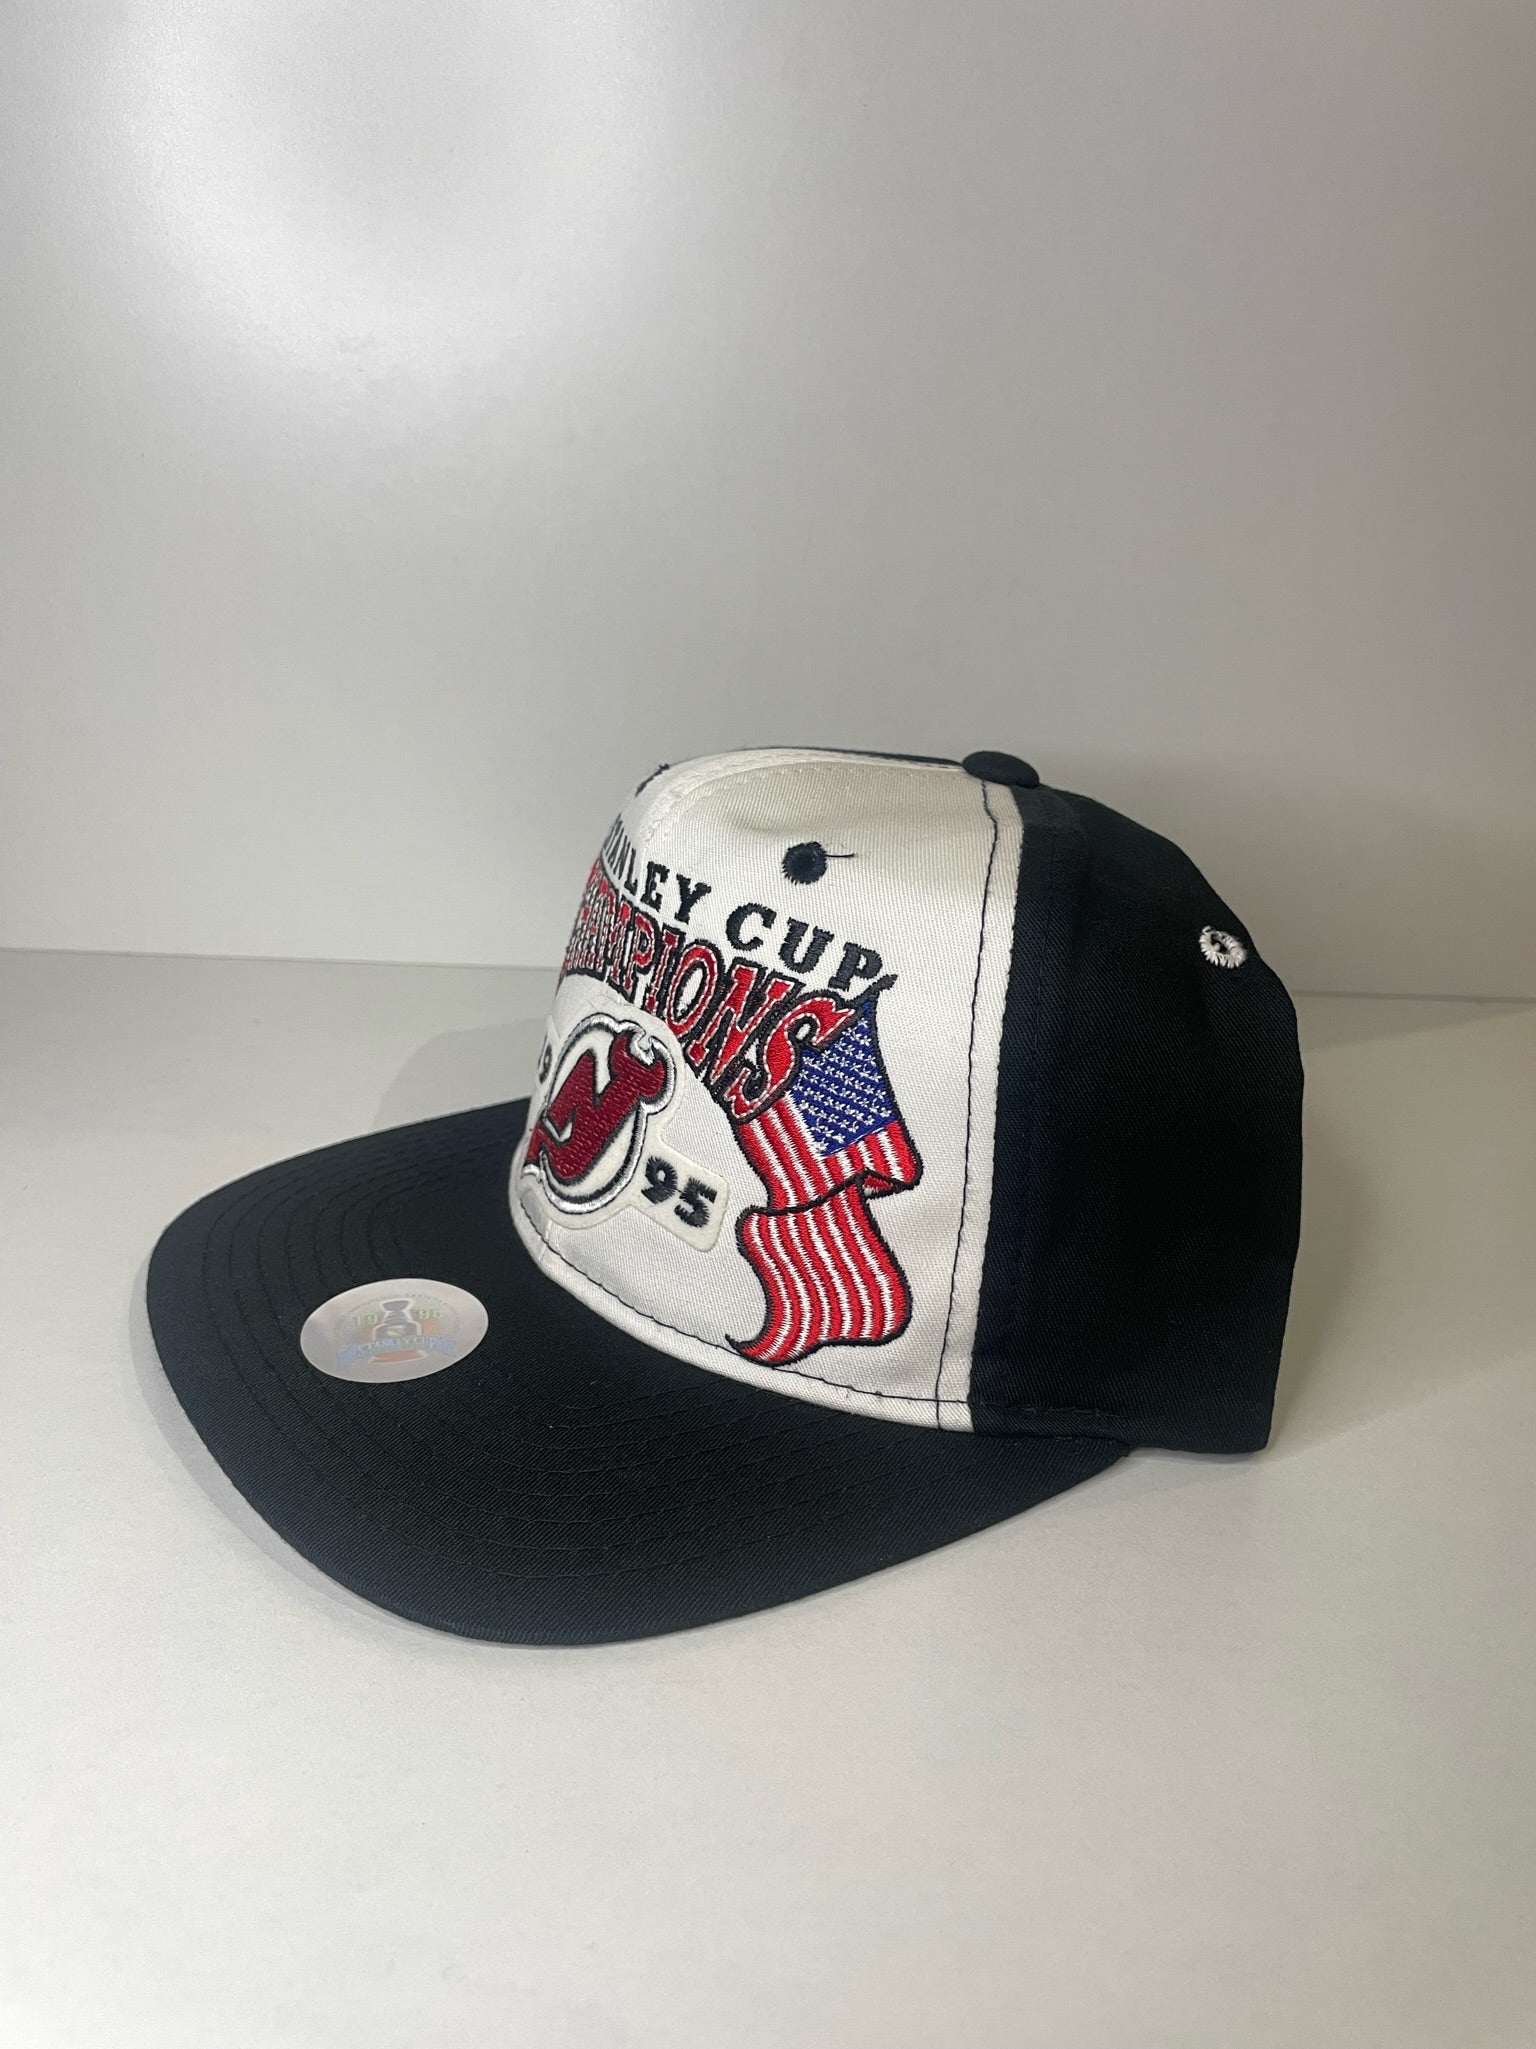 NEW JERSEY DEVILS 1995 Stanley Cup Snapback Script Hat Cap 